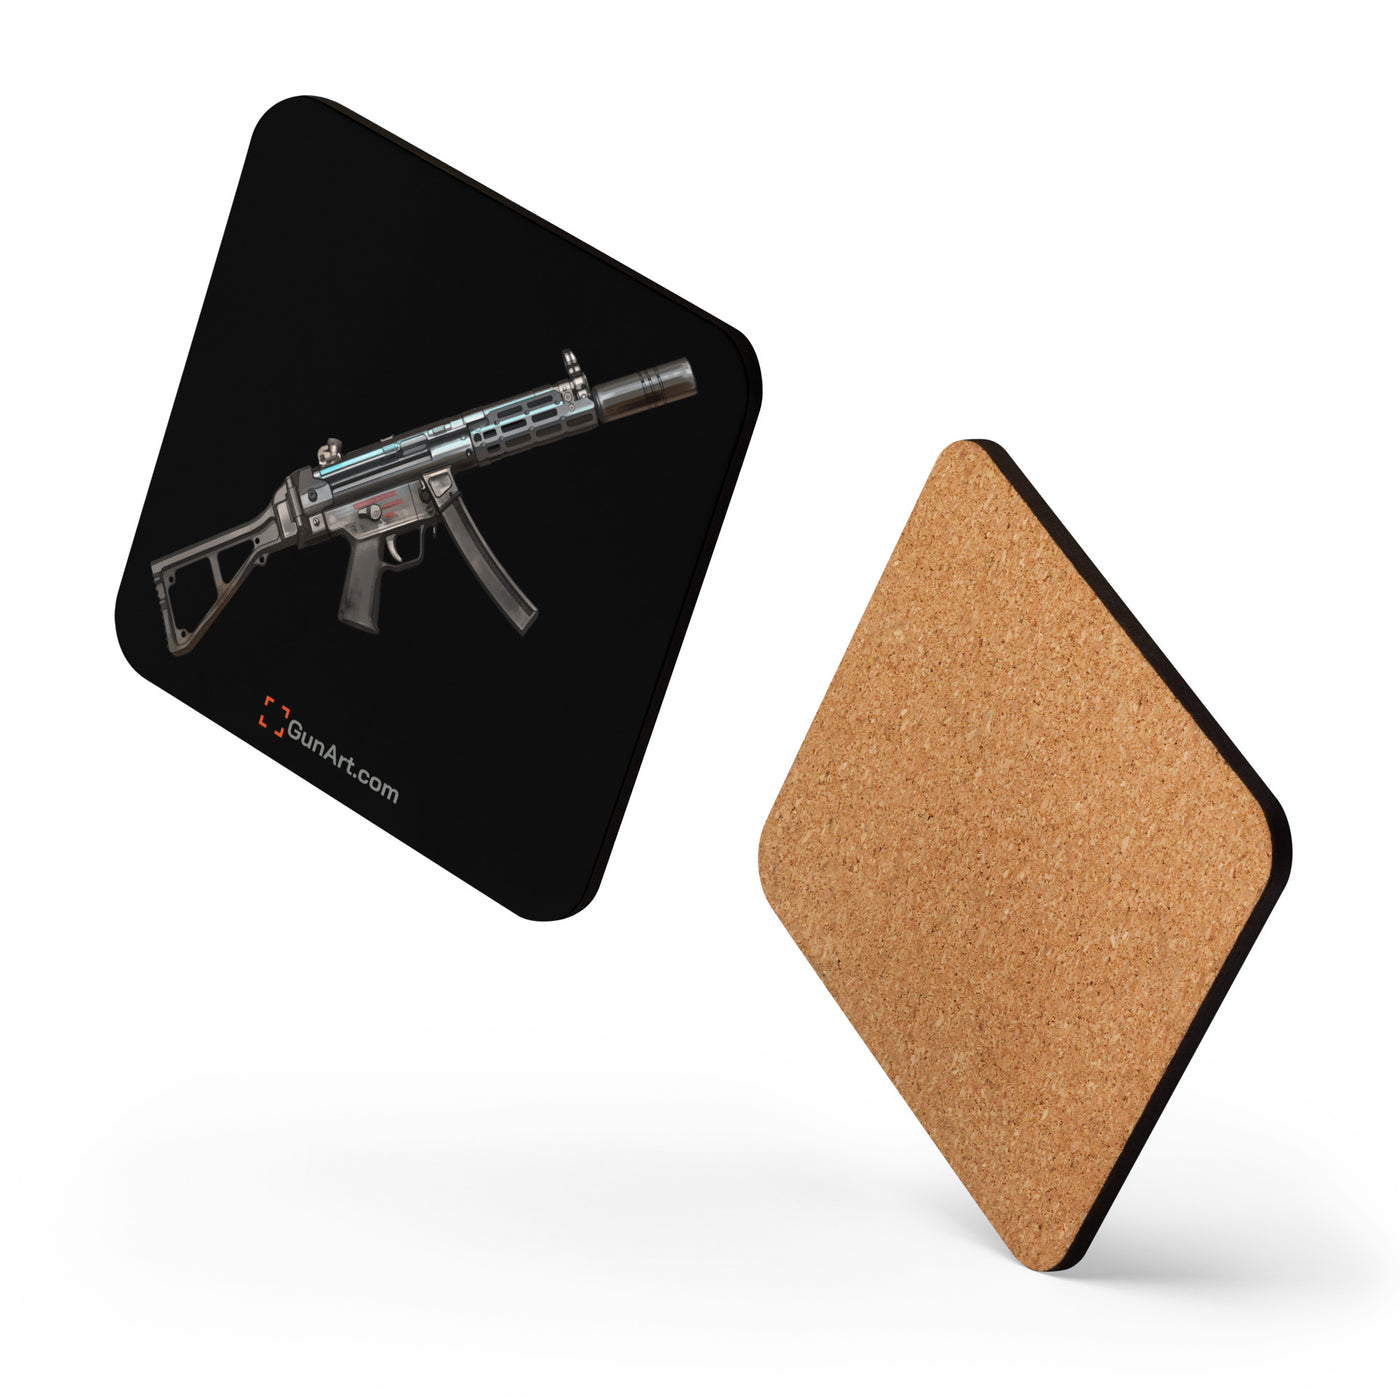 9x19mm Parabellum Subgun Cork-back Coaster - Just The Piece - Black Background